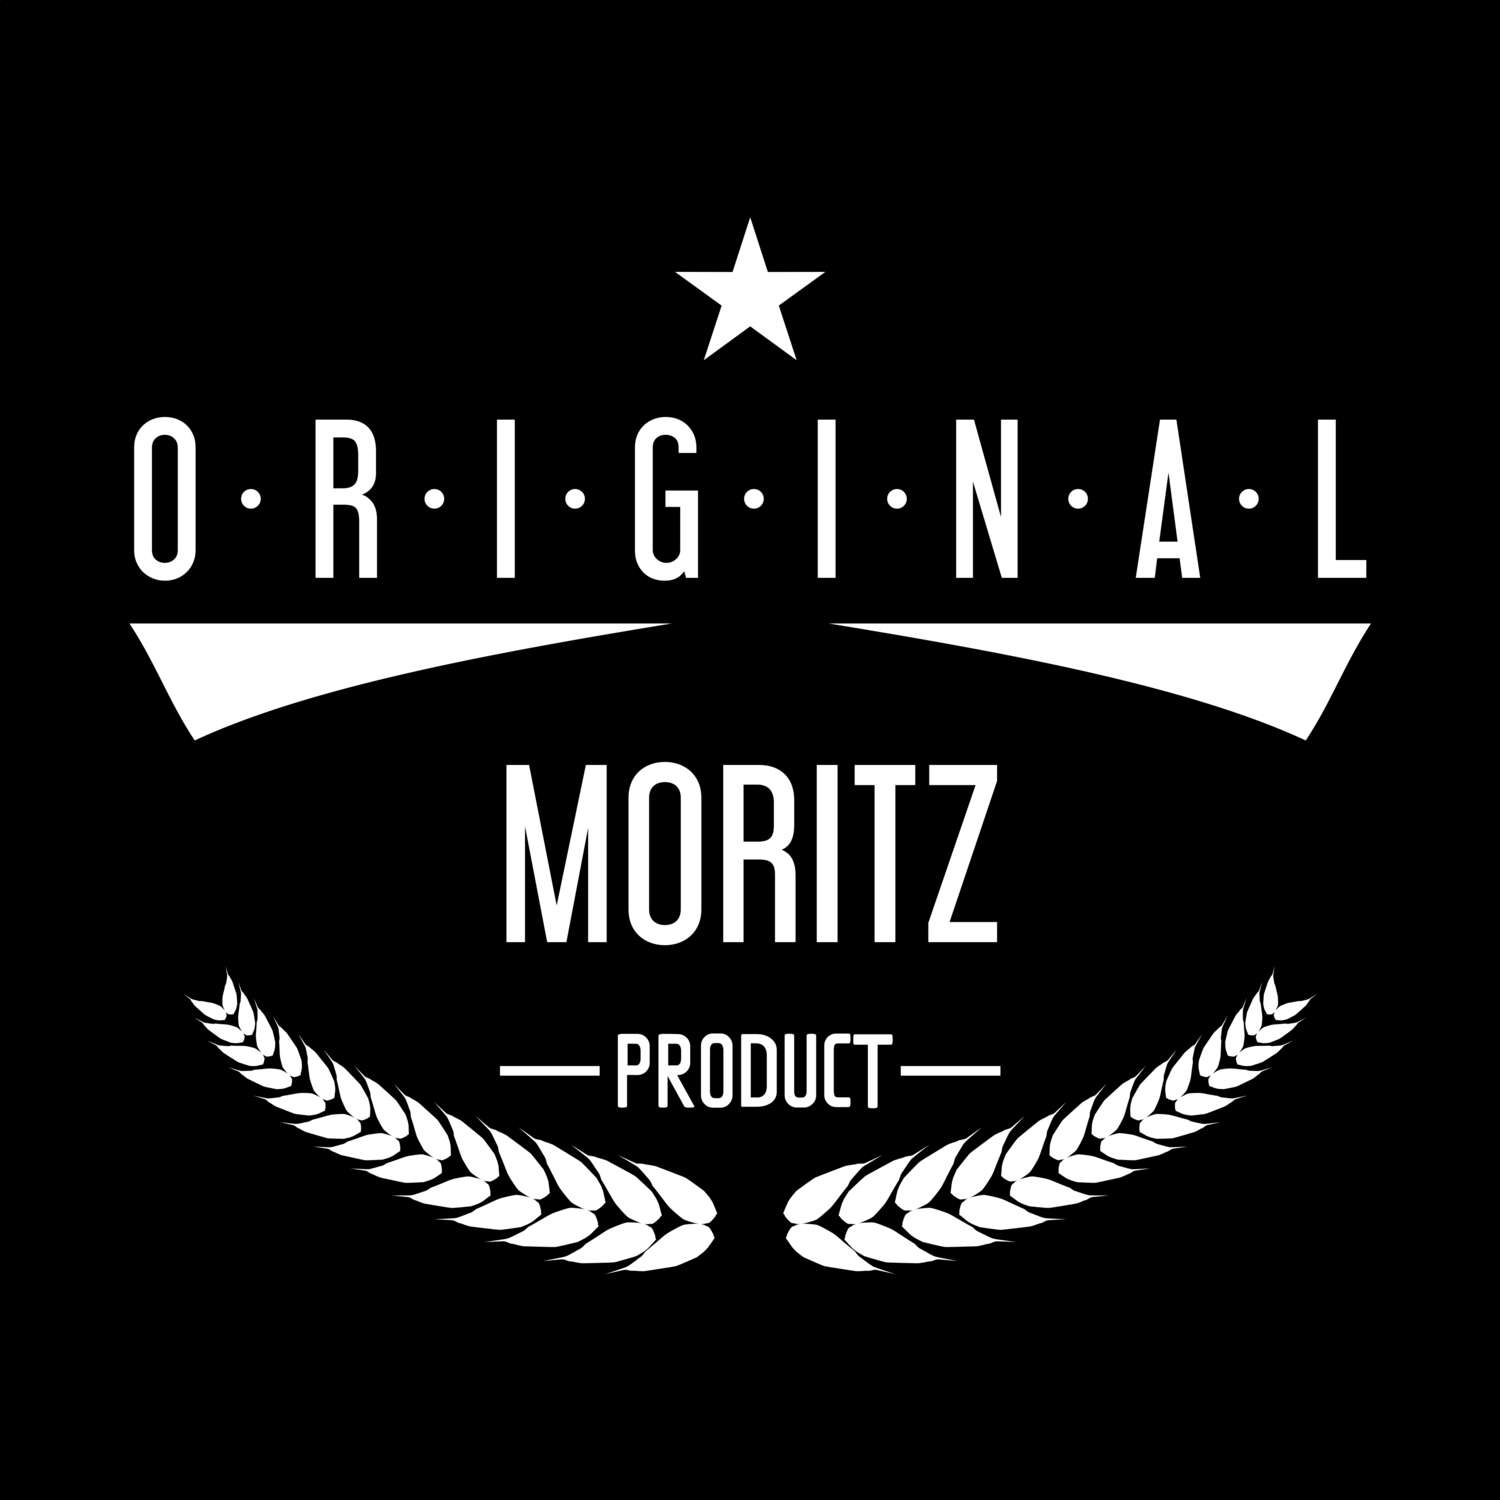 Moritz T-Shirt »Original Product«